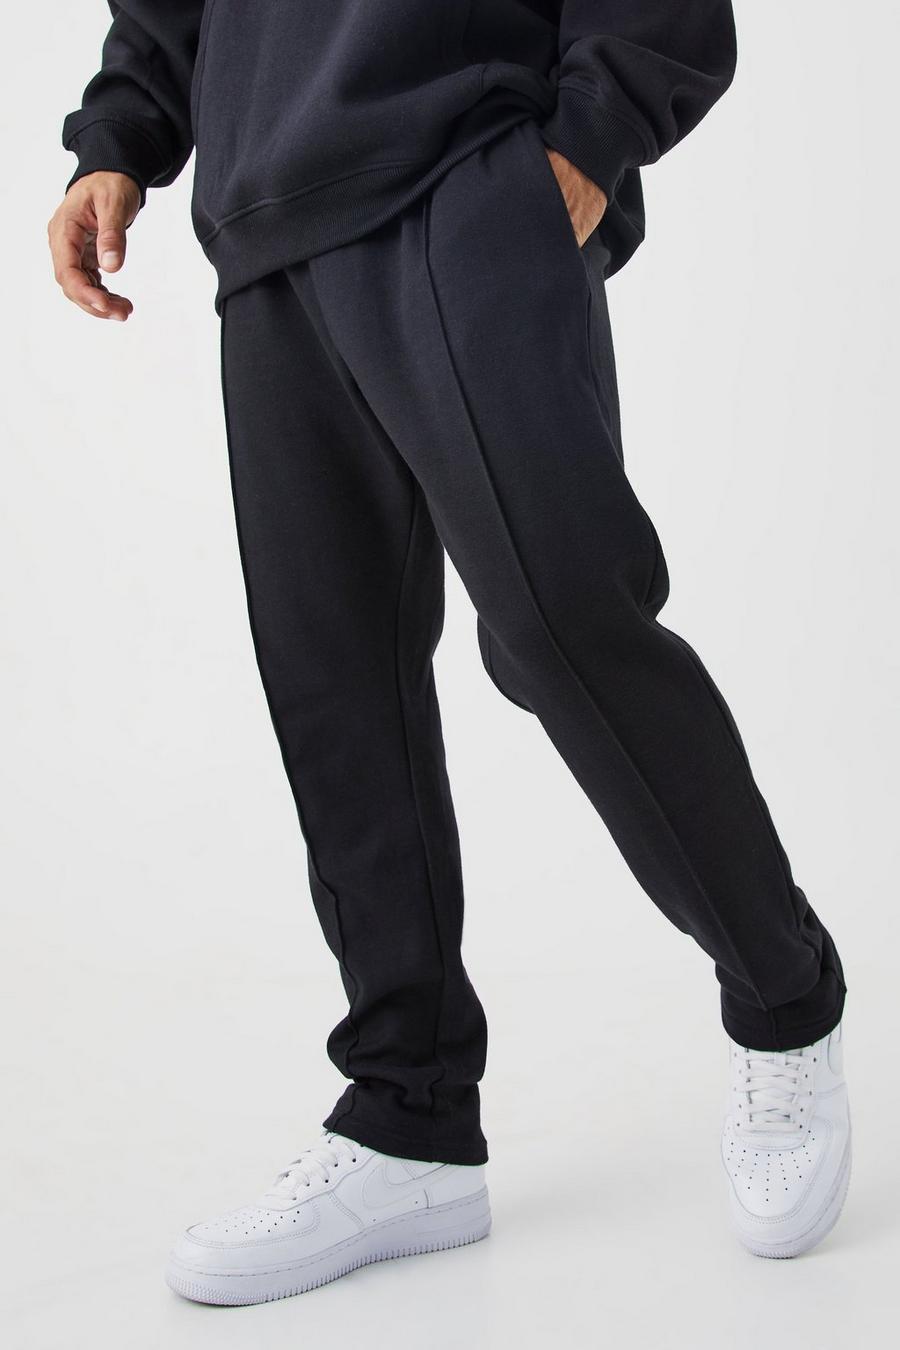 Nike Women's Cotton Tracksuit Bottoms Joggers / Size Small / Black /  Pintuck